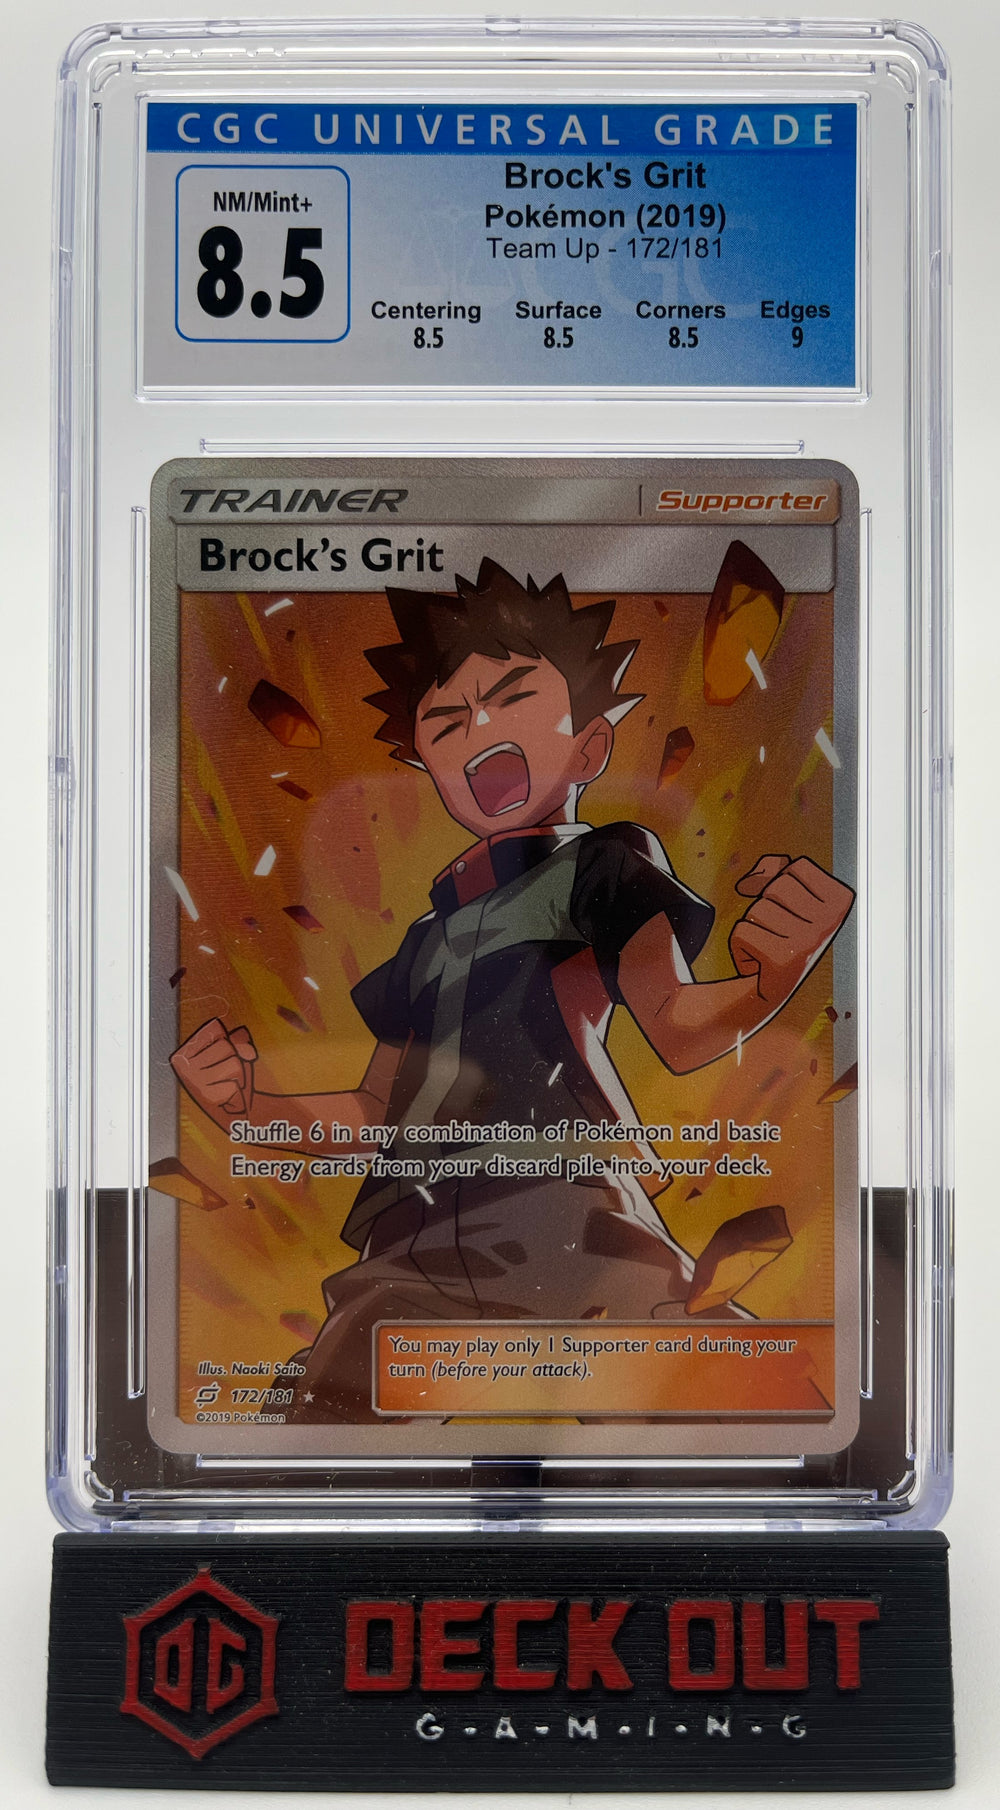 Brock's Grit - Team Up - 172/181 - CGC 8.5 (8.5/8.5/8.5/9.0)